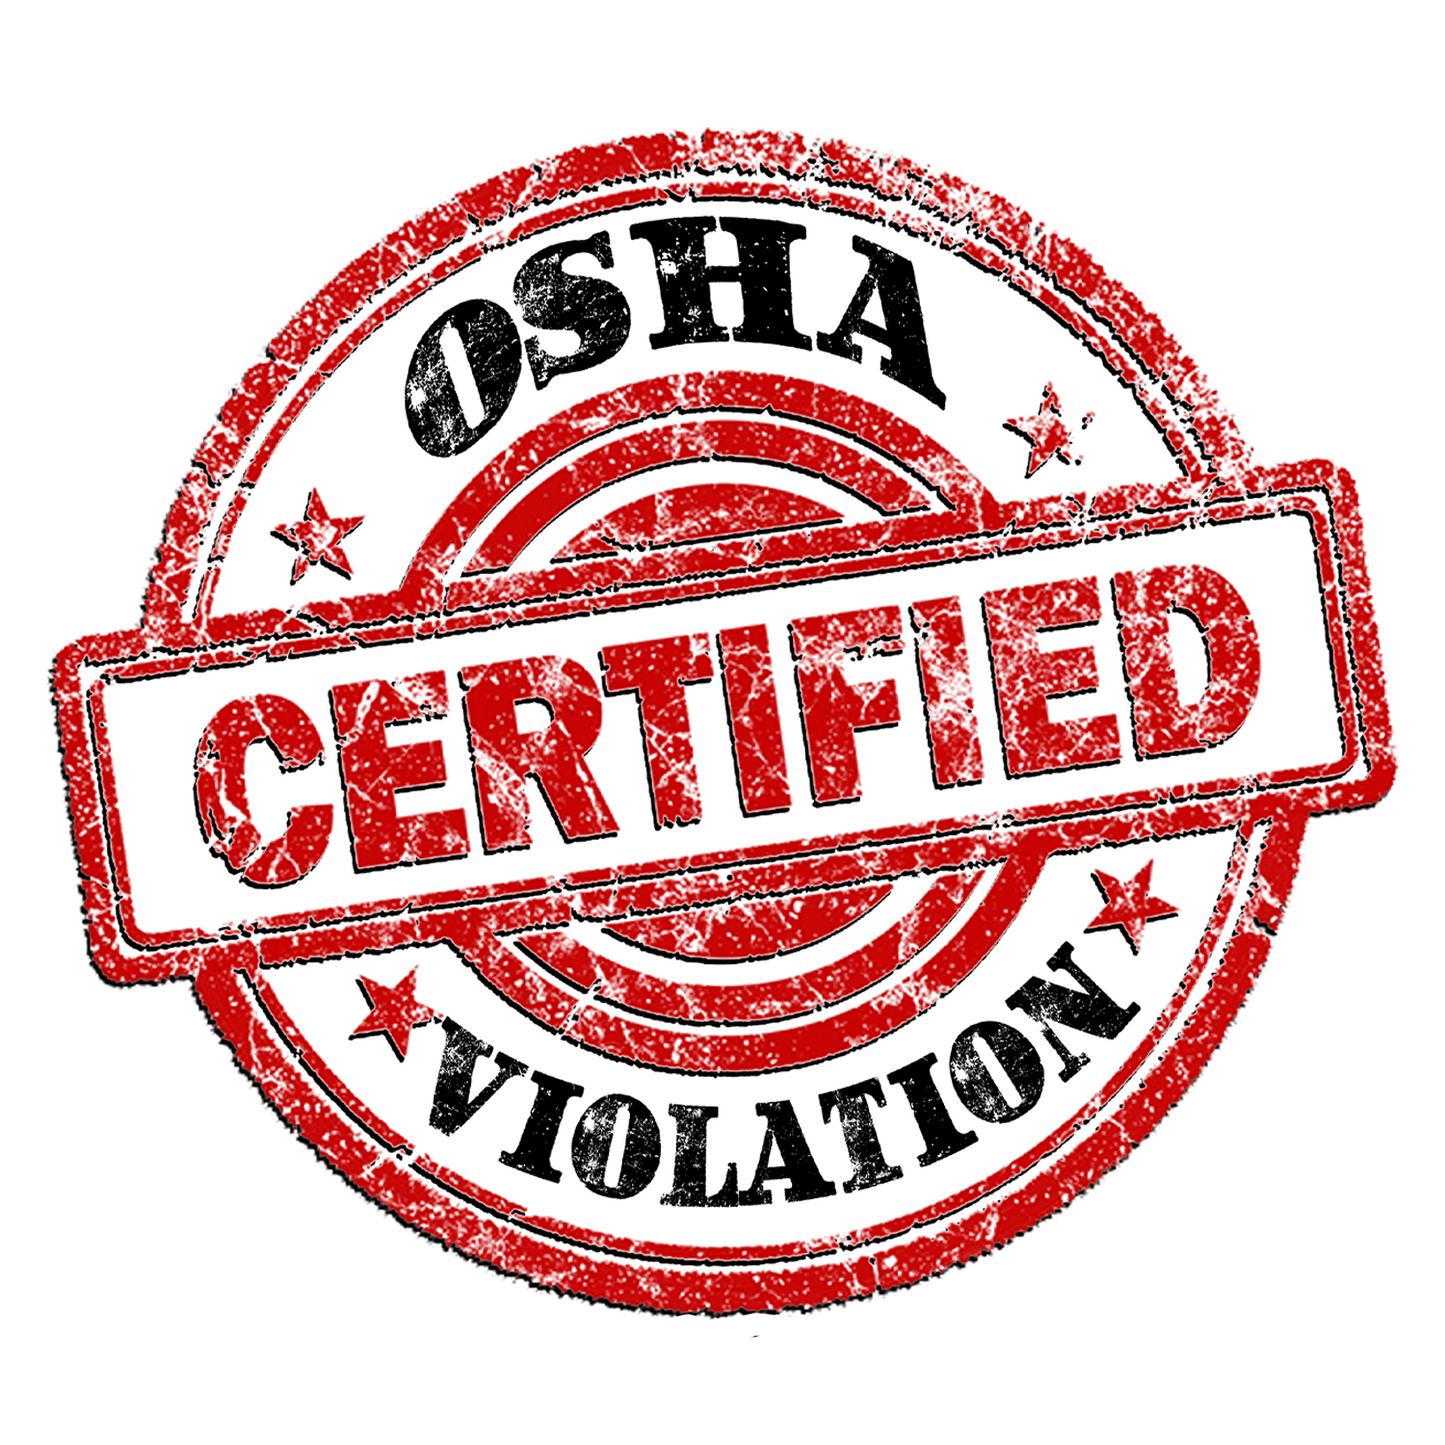 Certified OSHA Violation Sticker